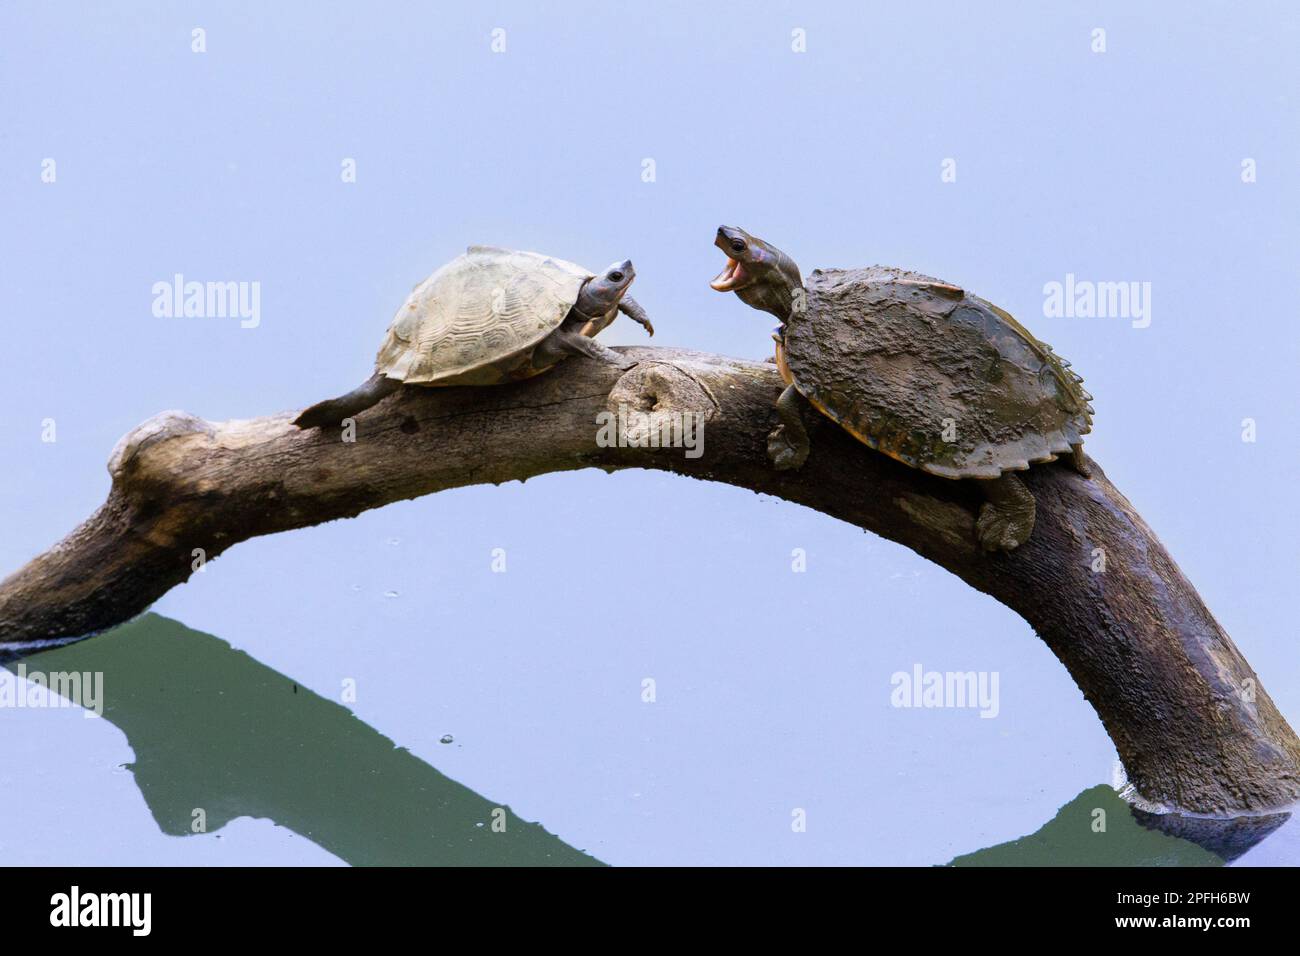 2 Assam roofed turtle, Sylhet roofed turtle fight, Pangshura sylhetensis. Family Geoemydidae. Kaziranga National Park, Assam, India Stock Photo